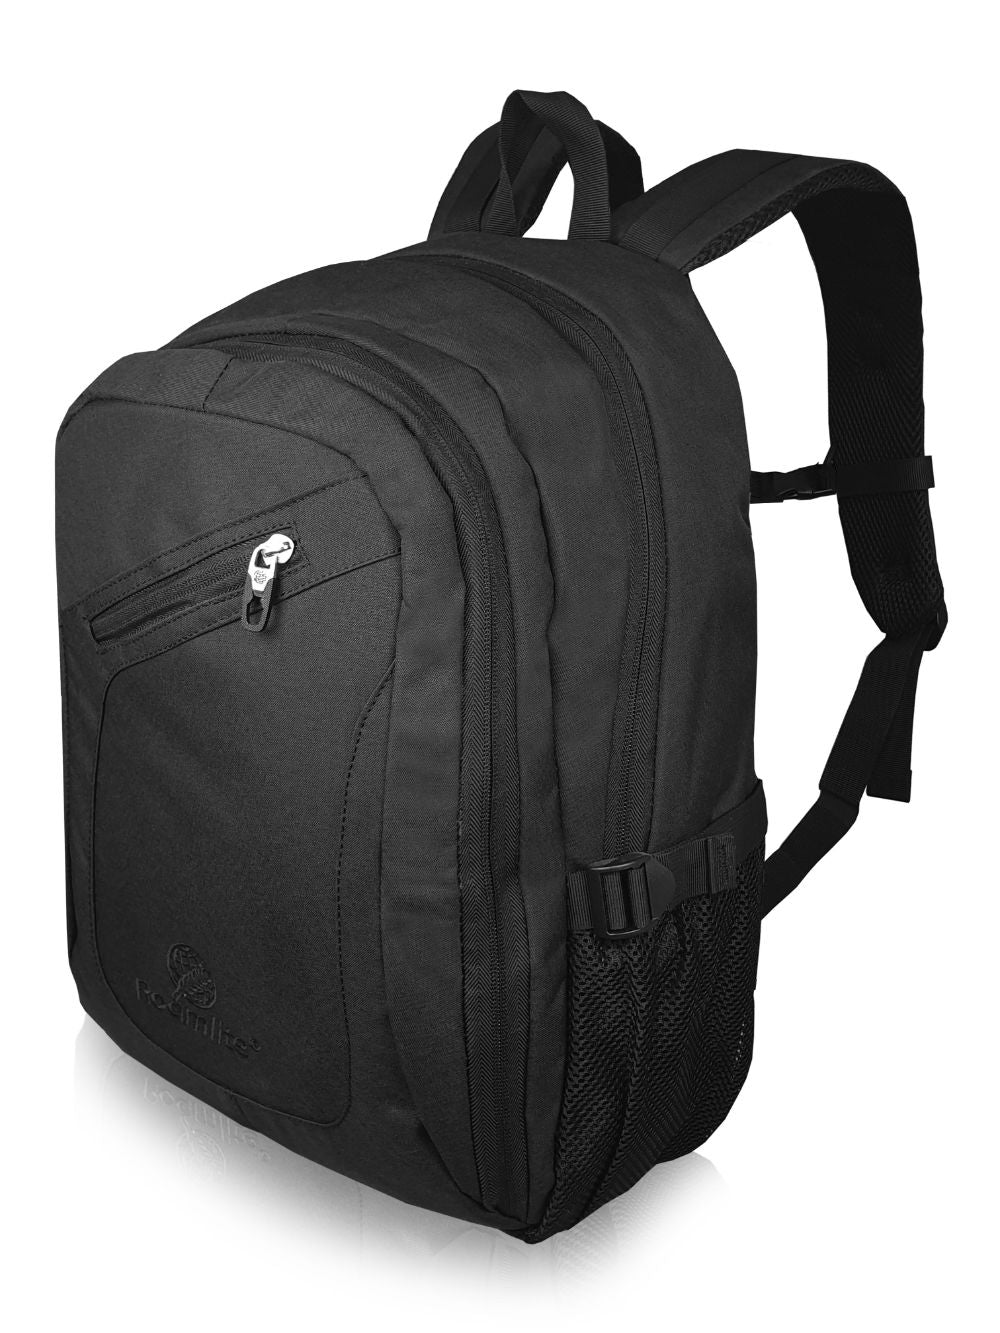 Roamlite Work Laptop Backpack black rl44 front